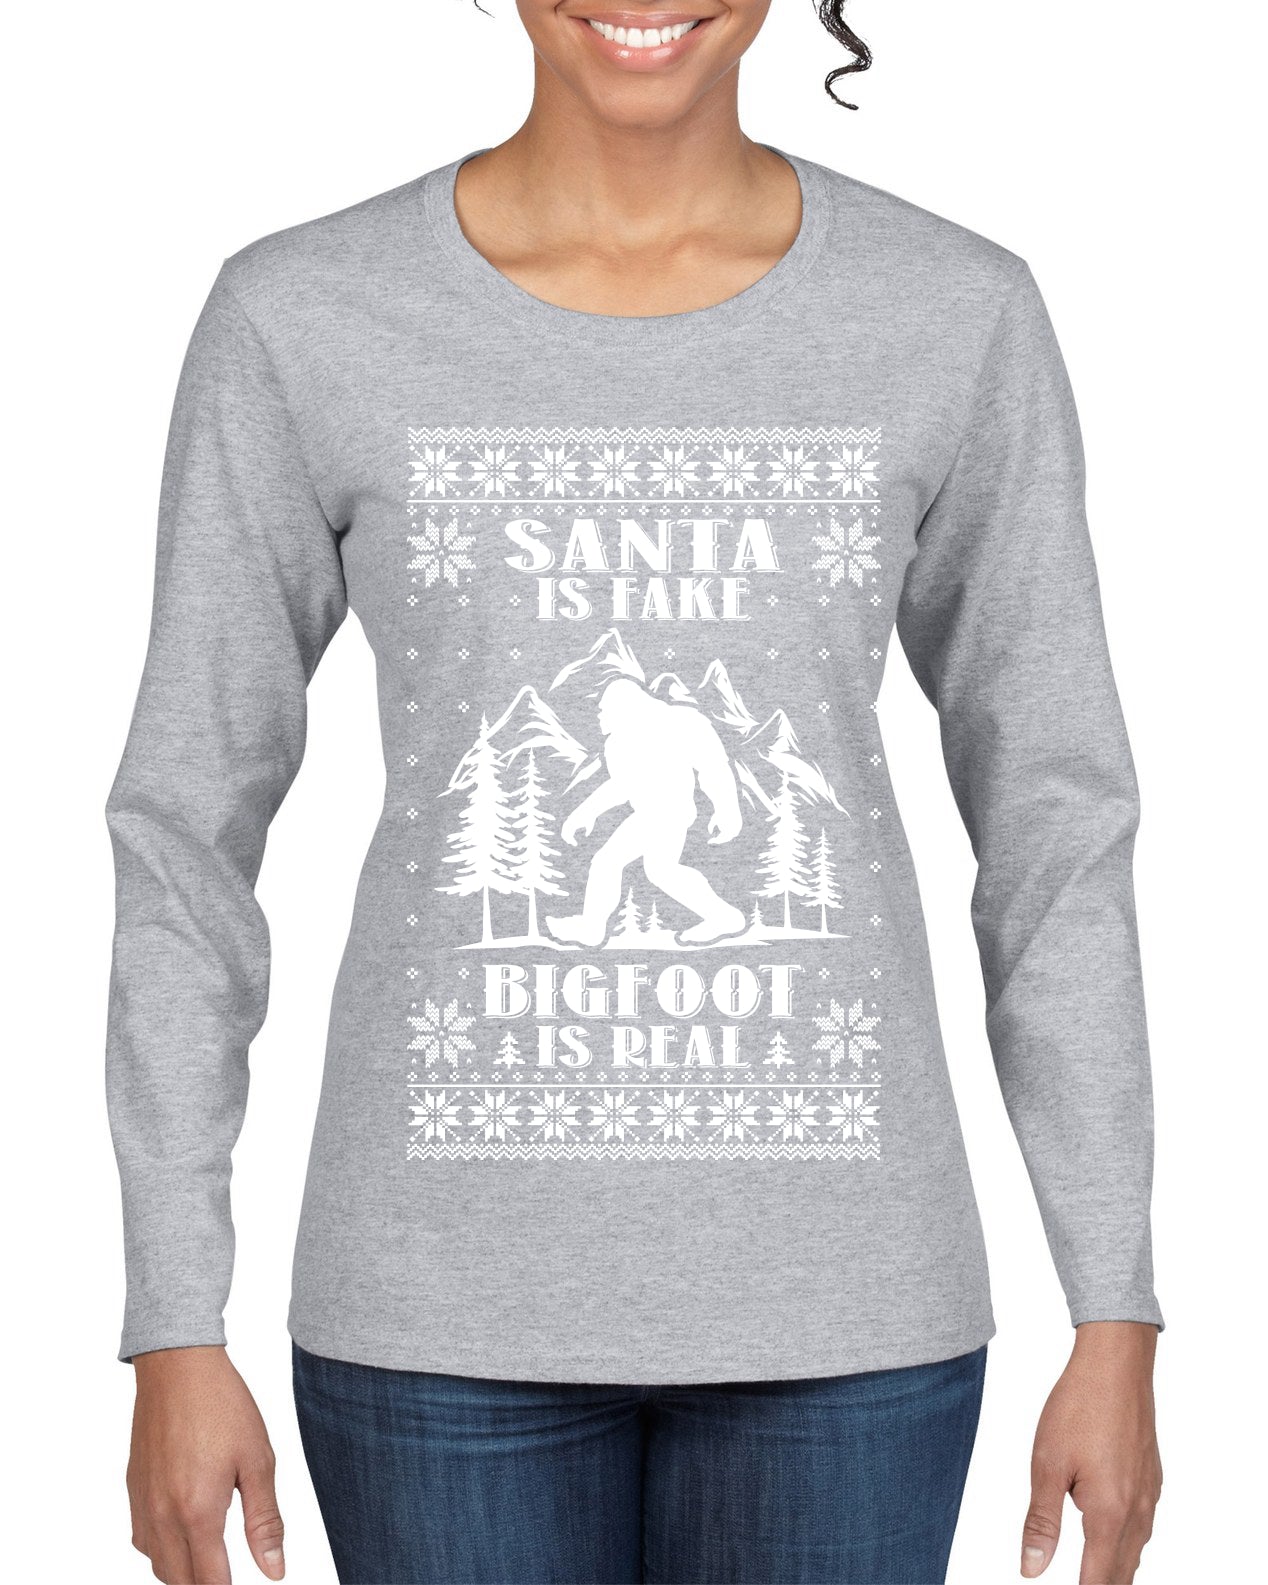 Santa Is Fake Bigfoot Is Real Ugly Christmas Sweater Womens Graphic Long Sleeve T-Shirt